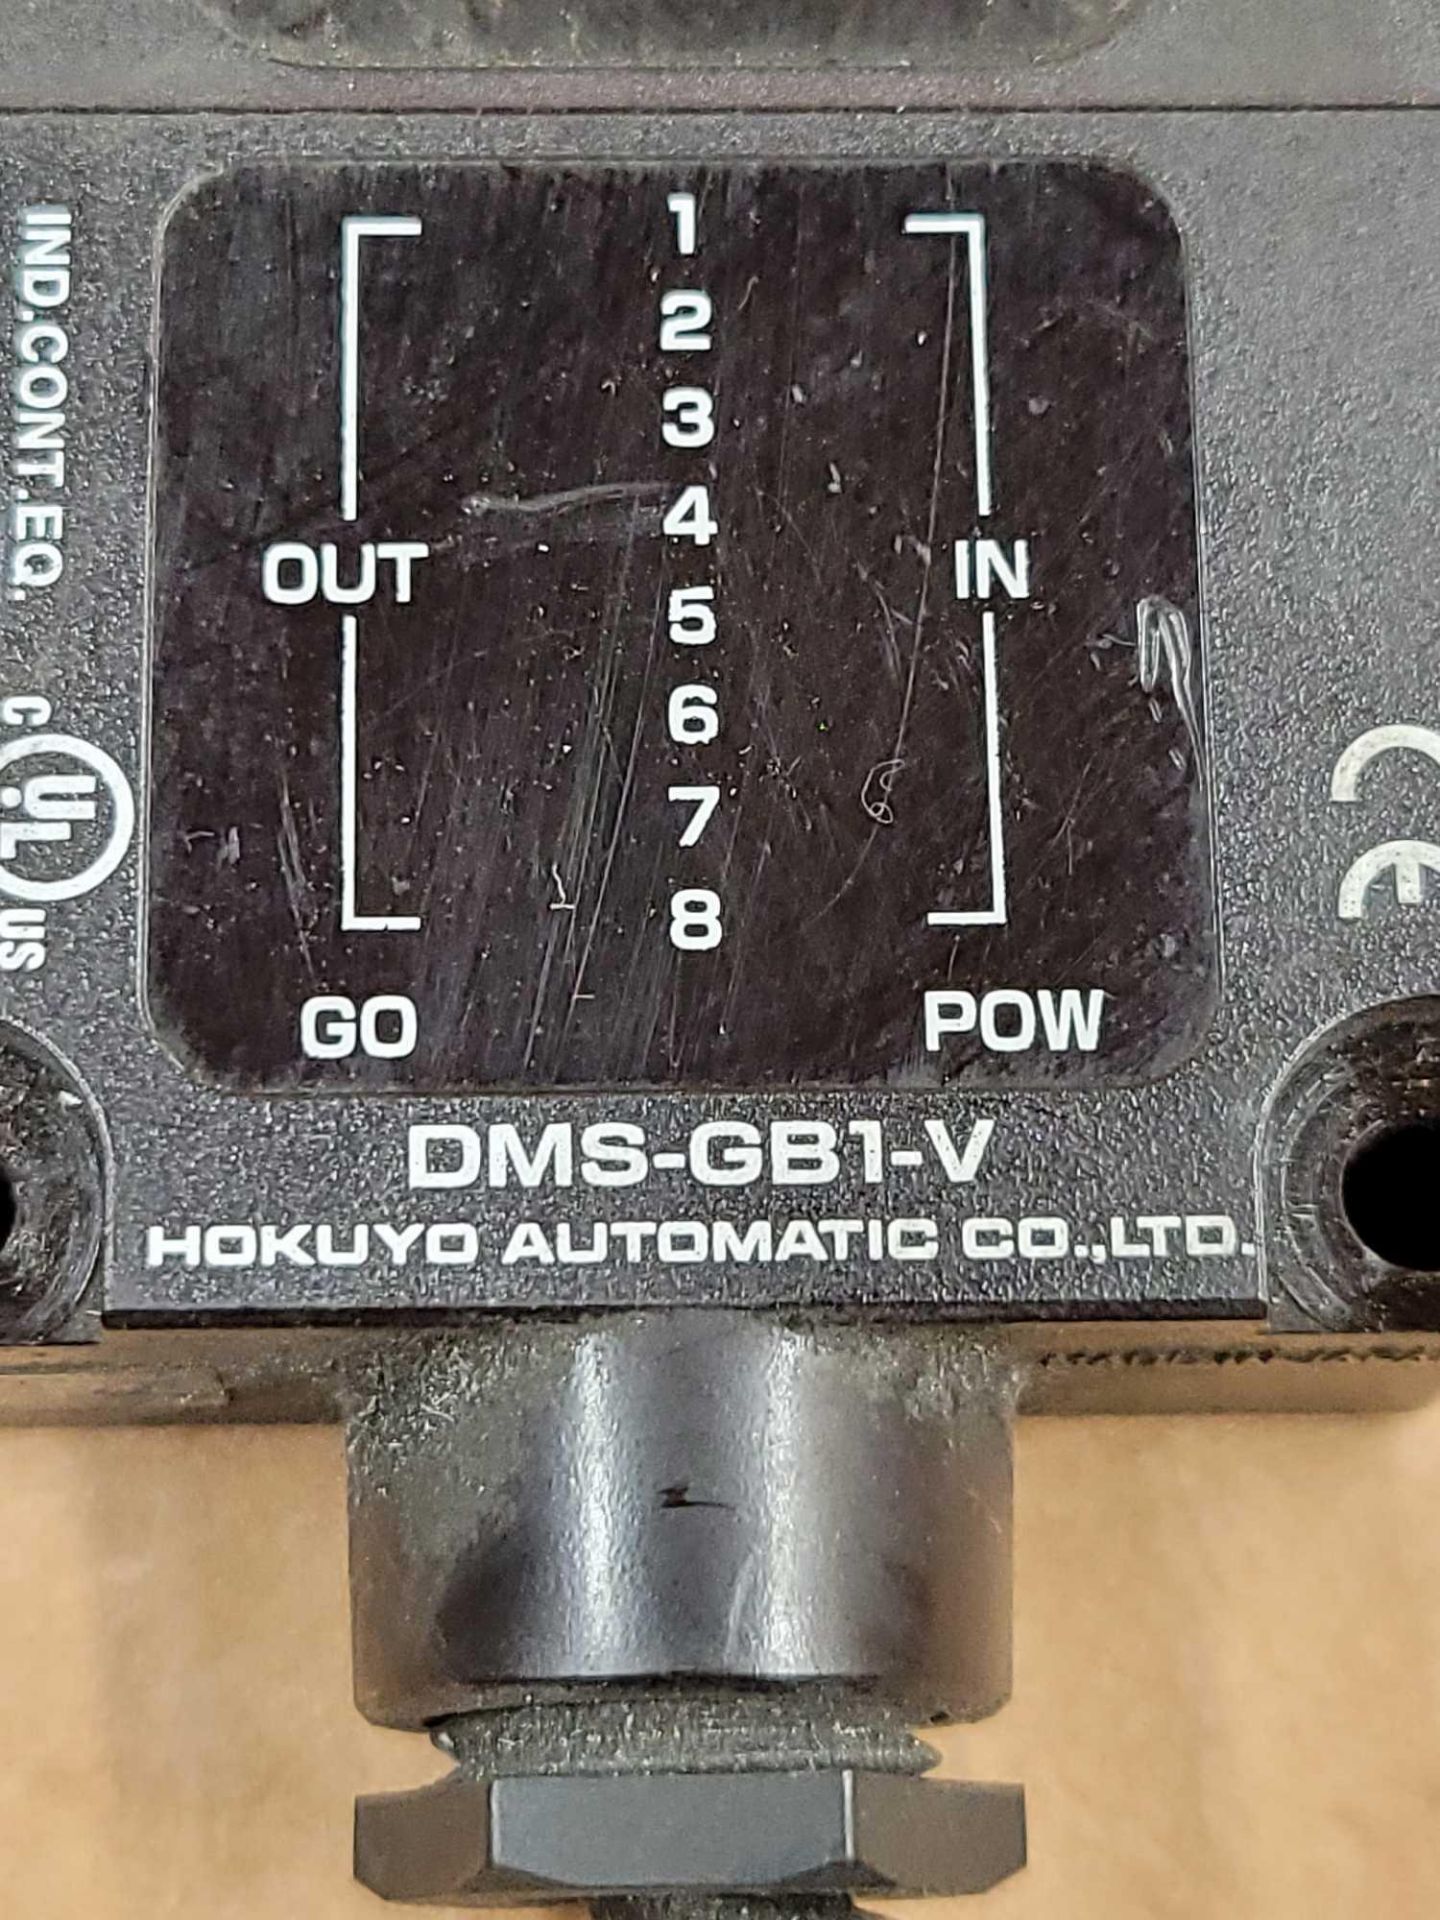 LOT OF 3 HOKUYO AUTOMATIC DMS-GB1-V / Photoelectric Sensor  /  Lot Weight: 0.6 lbs - Image 4 of 5